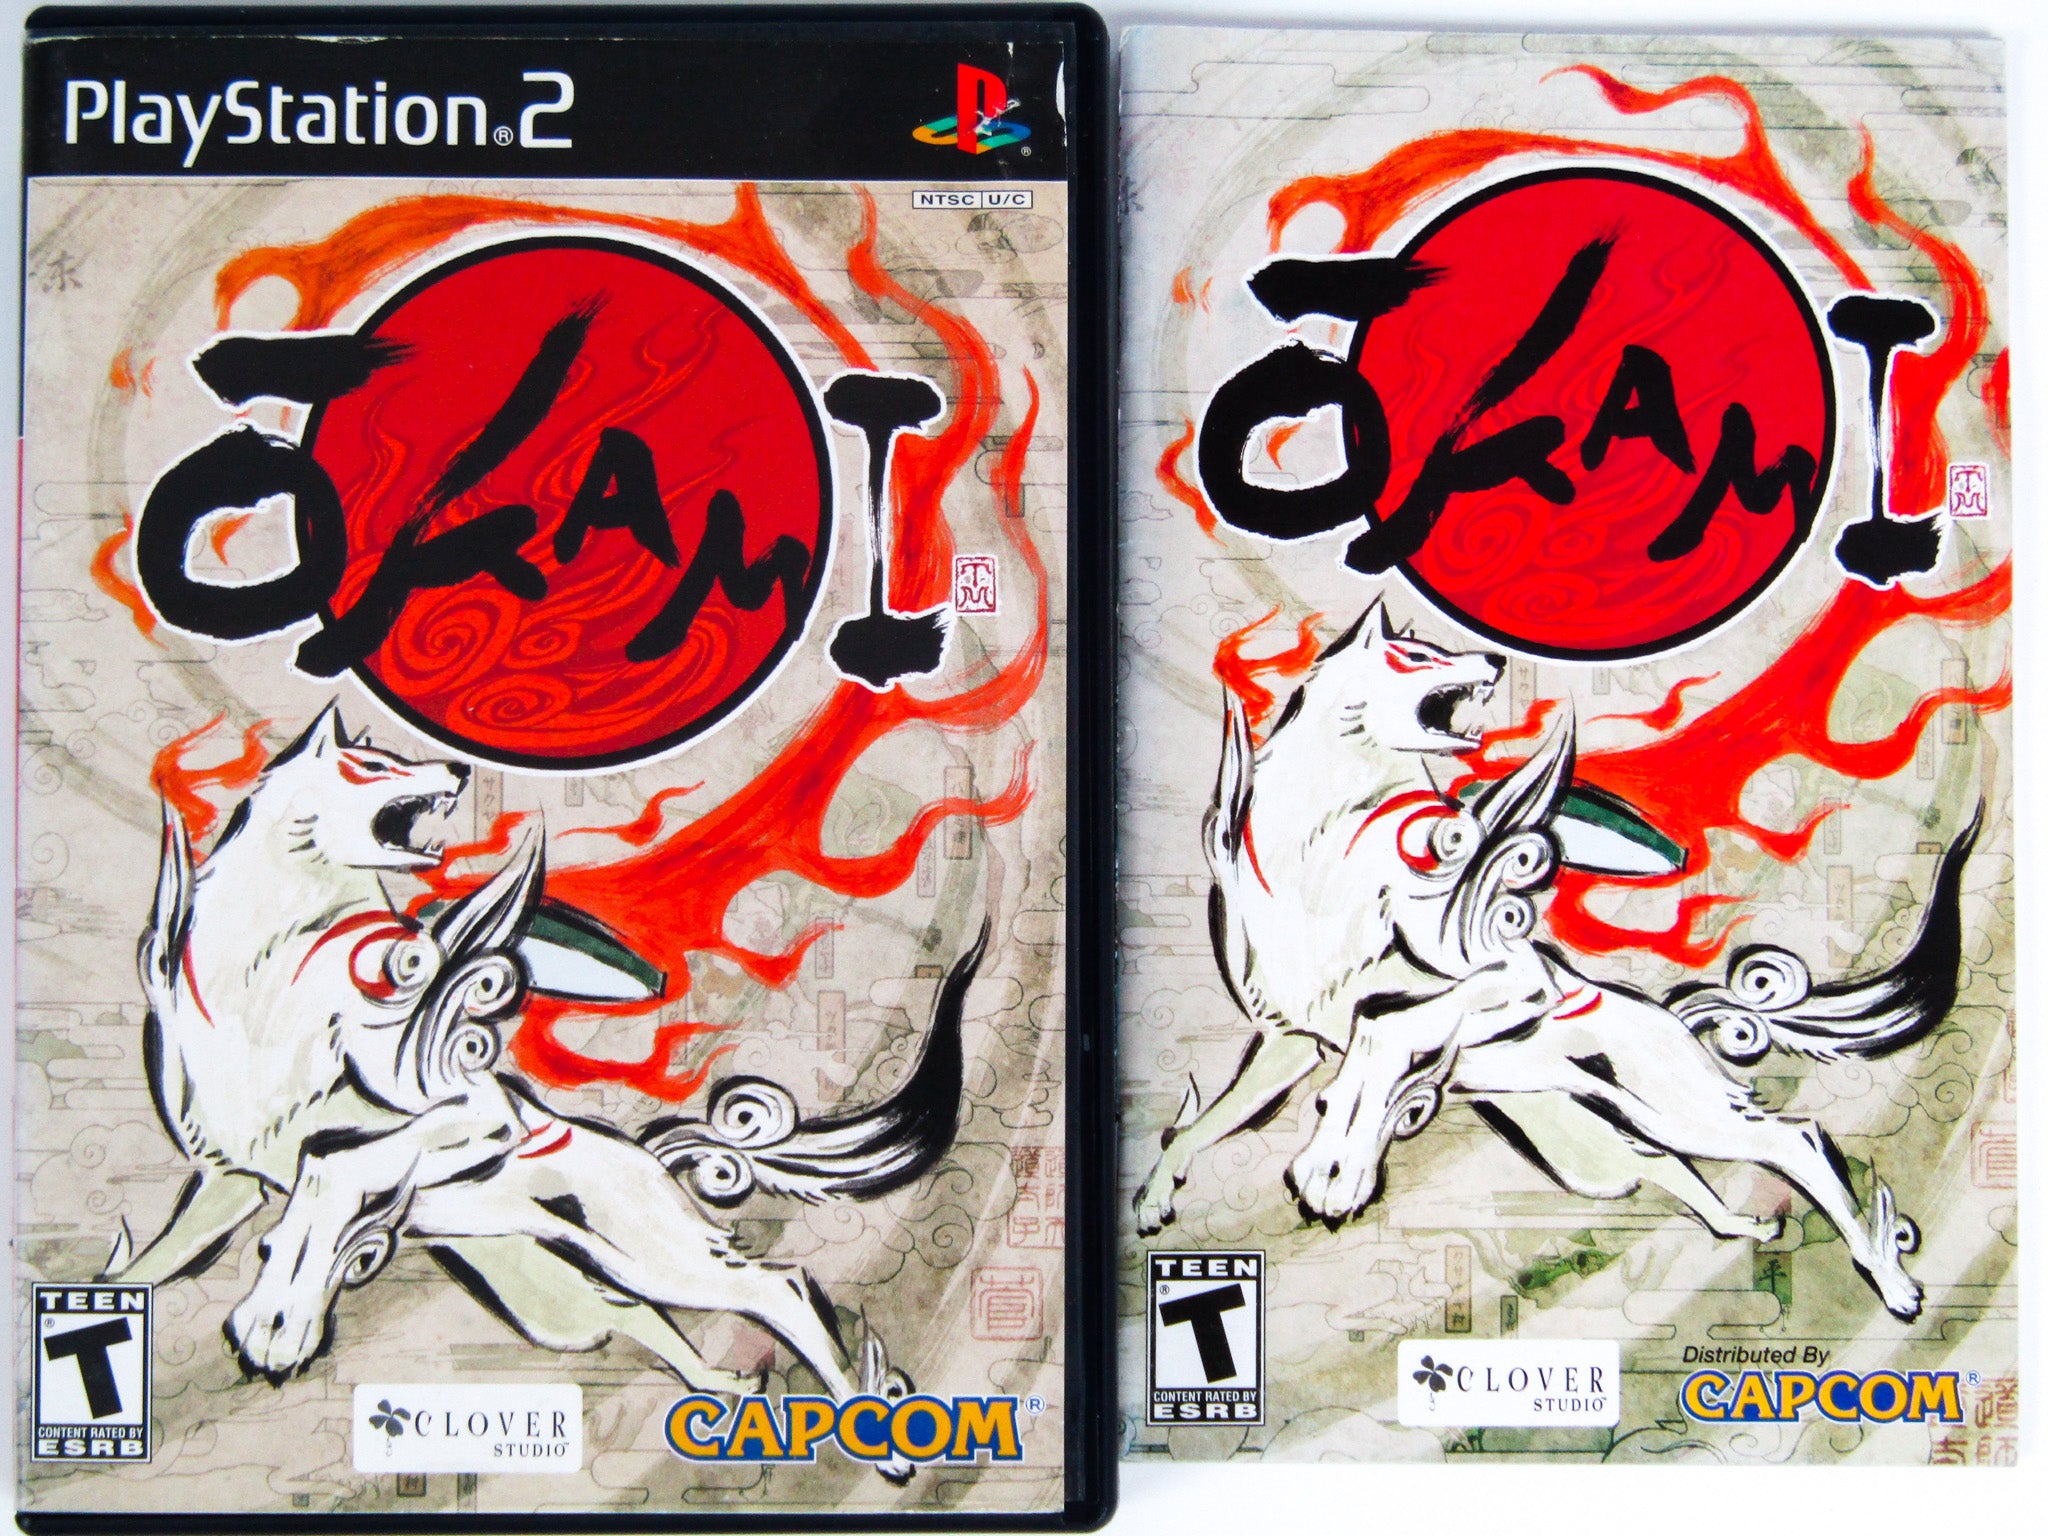 Okami PlayStation 2 Box Art Cover by finalfantaseer22